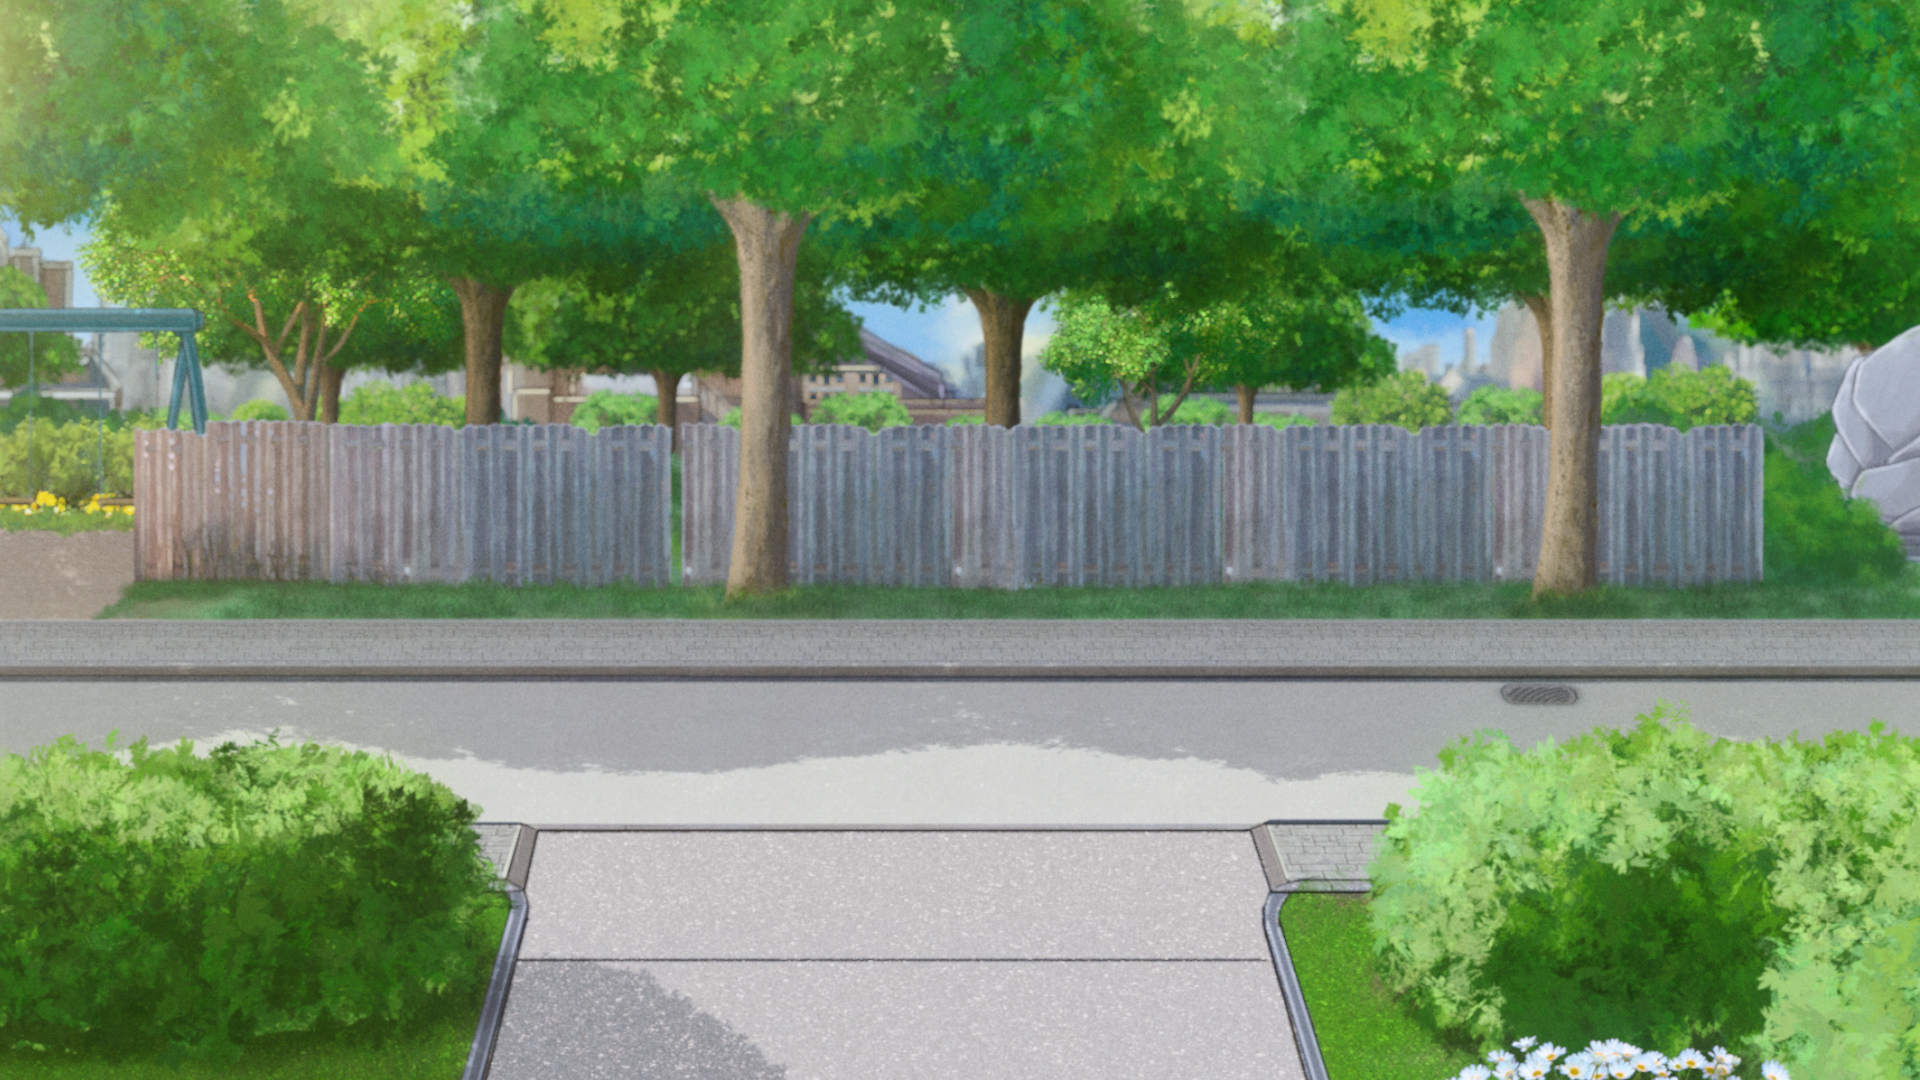 Anime 1920x1080 outdoors digital art nature anime grass plants trees road swings outskirts